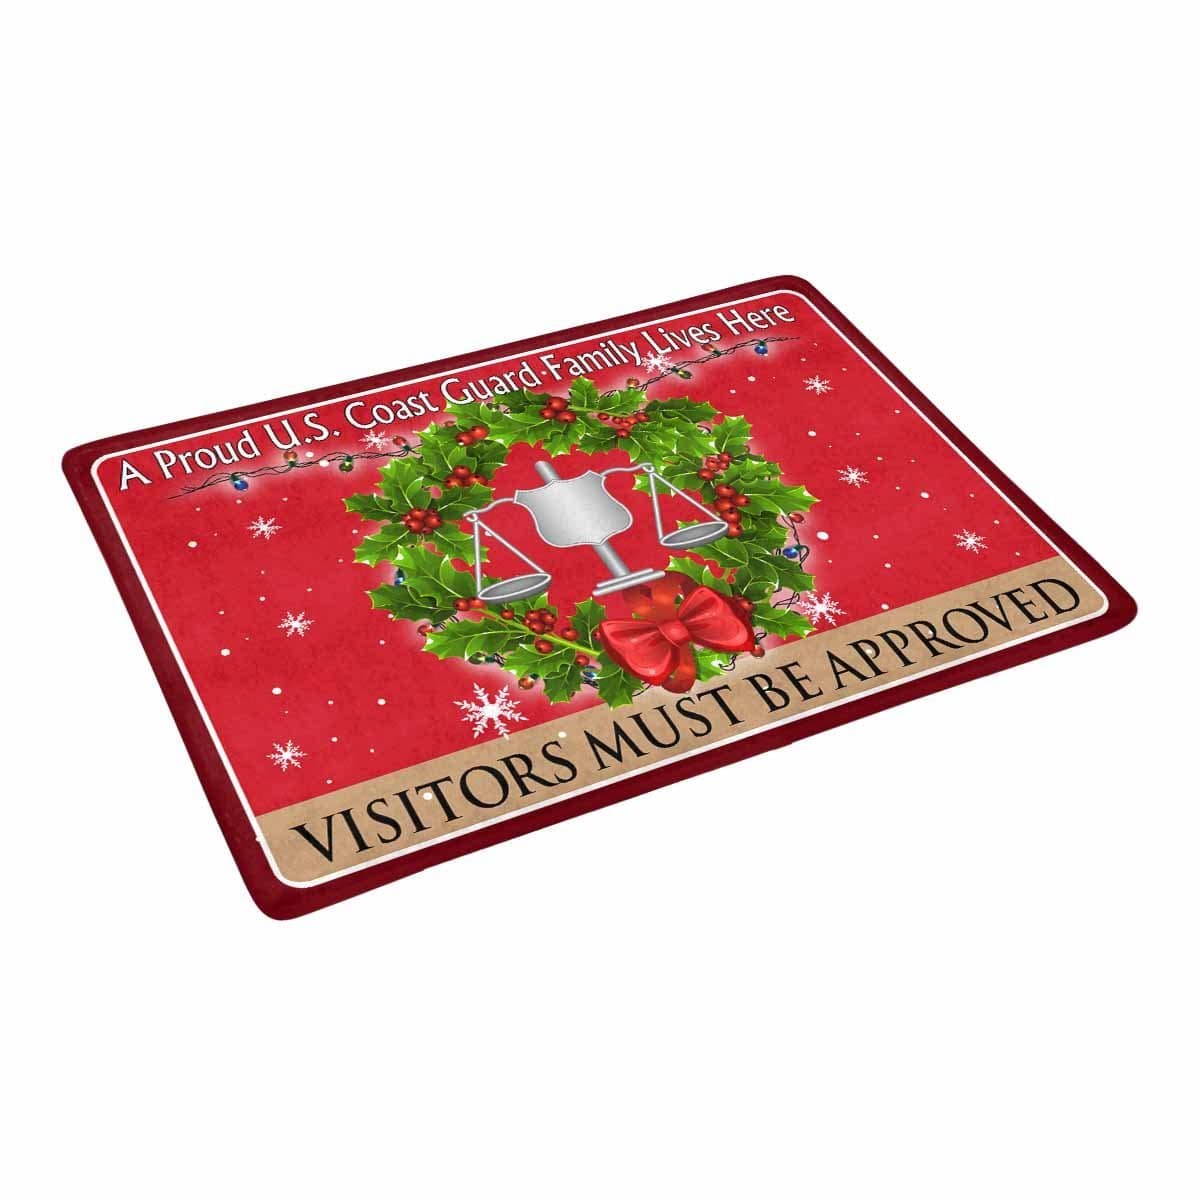 USCG INVESTIGATOR IV Logo - Visitors must be approved Christmas Doormat-Doormat-USCG-Rate-Veterans Nation